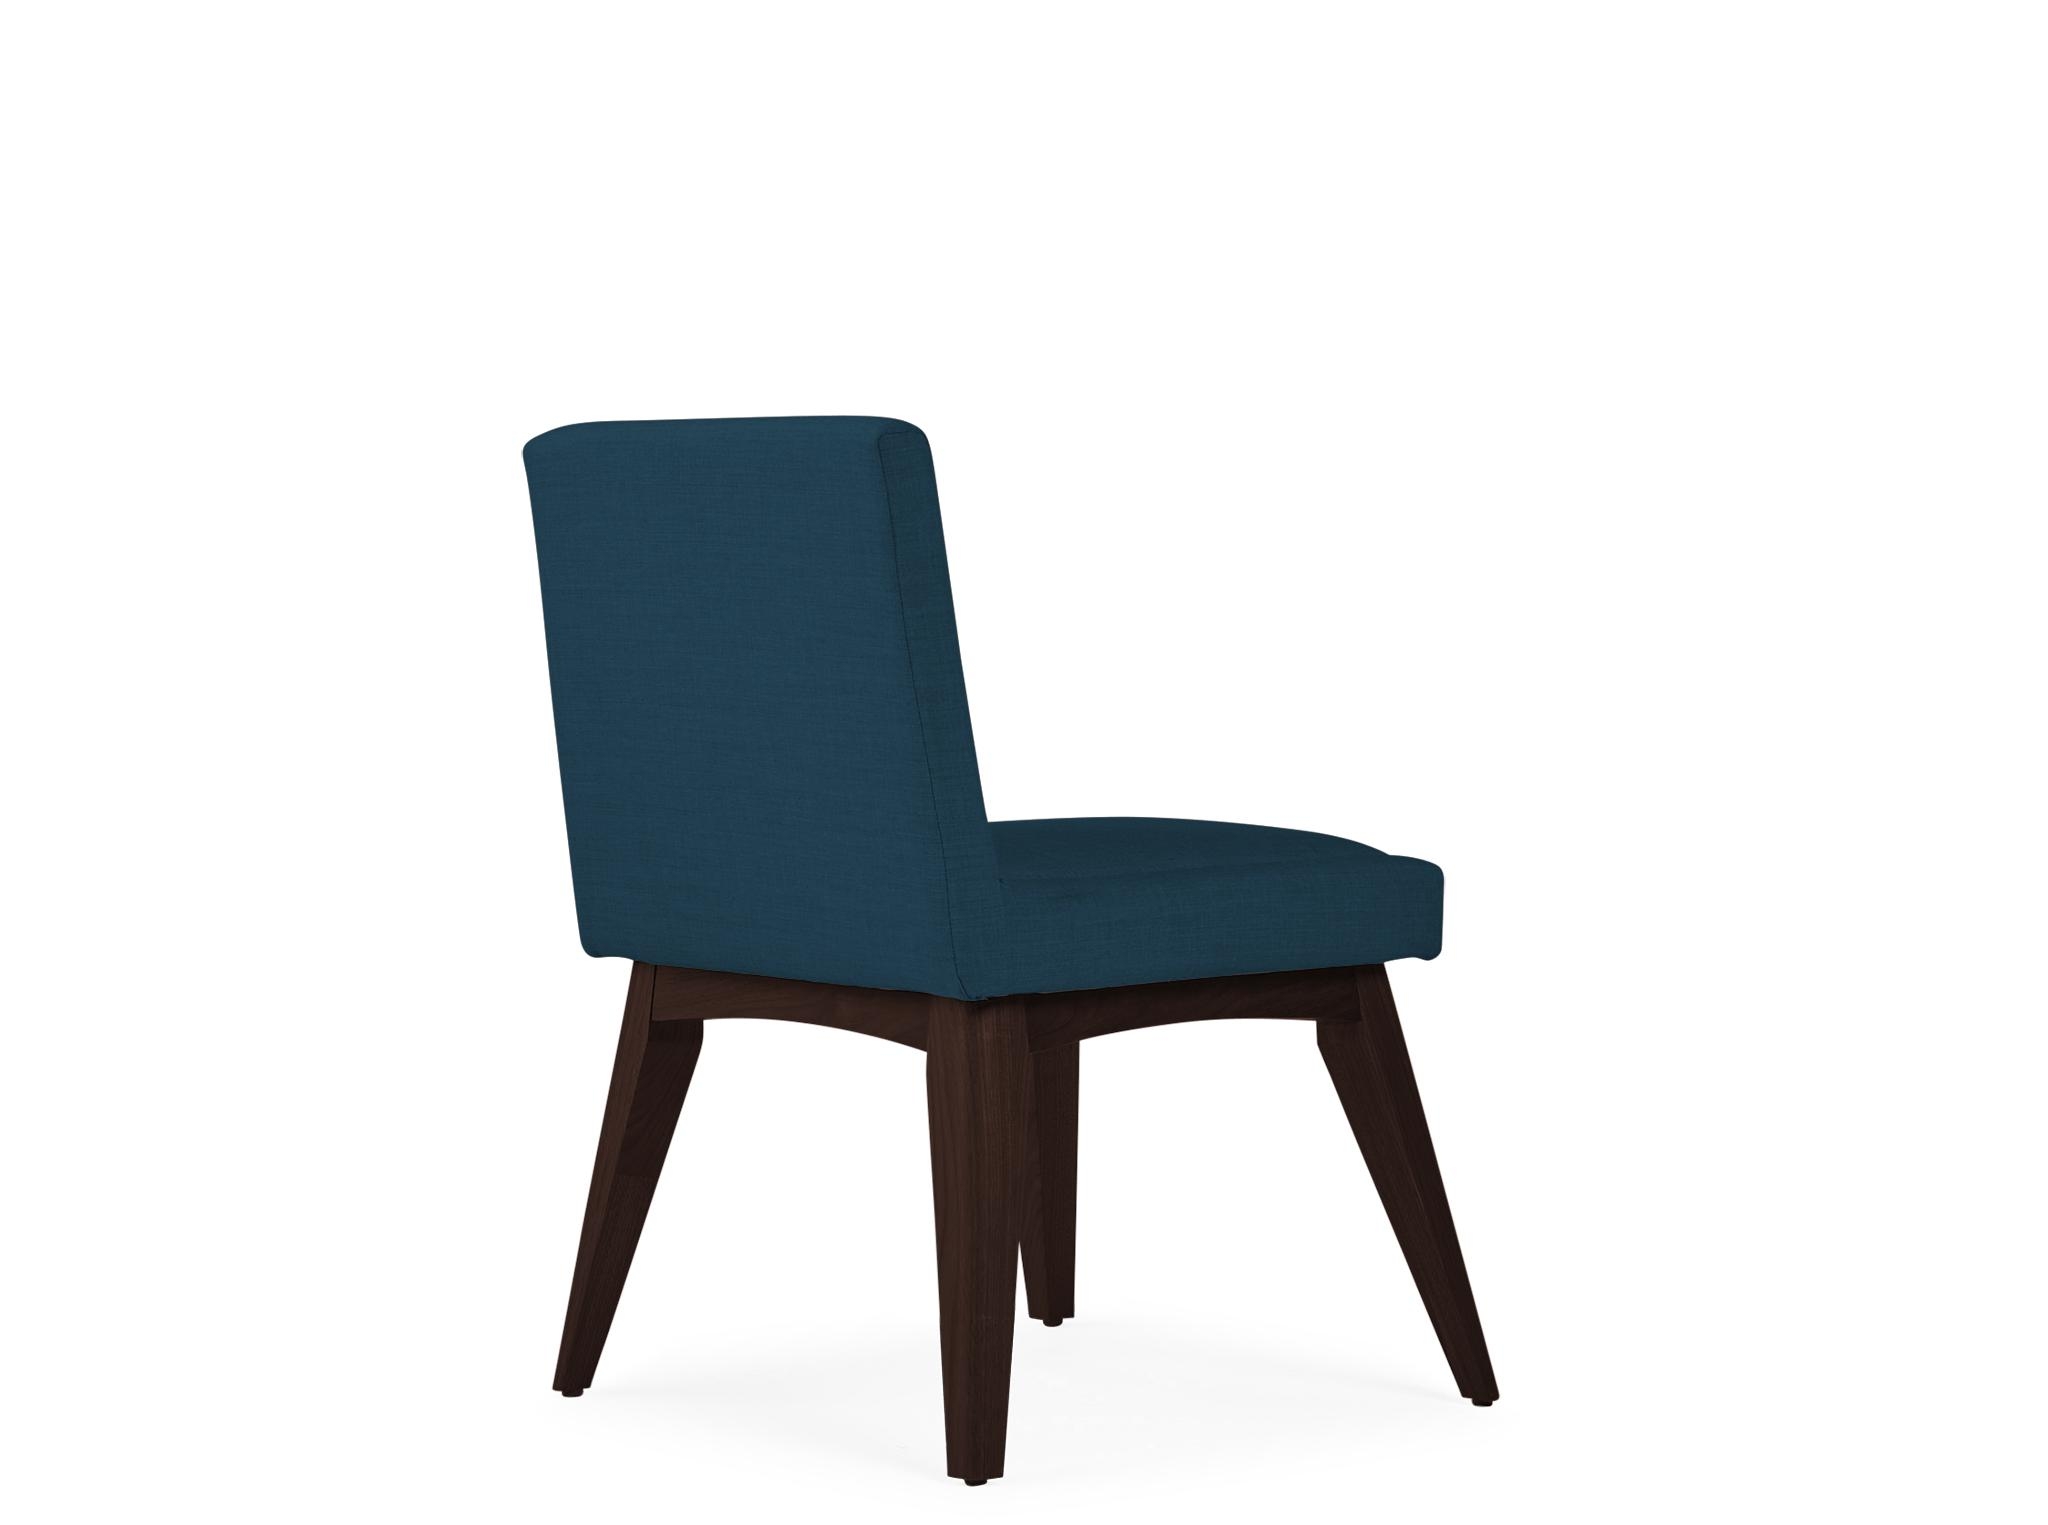 Blue Spencer Mid Century Modern Dining Chair - Key Largo Zenith Teal - Walnut - Image 3